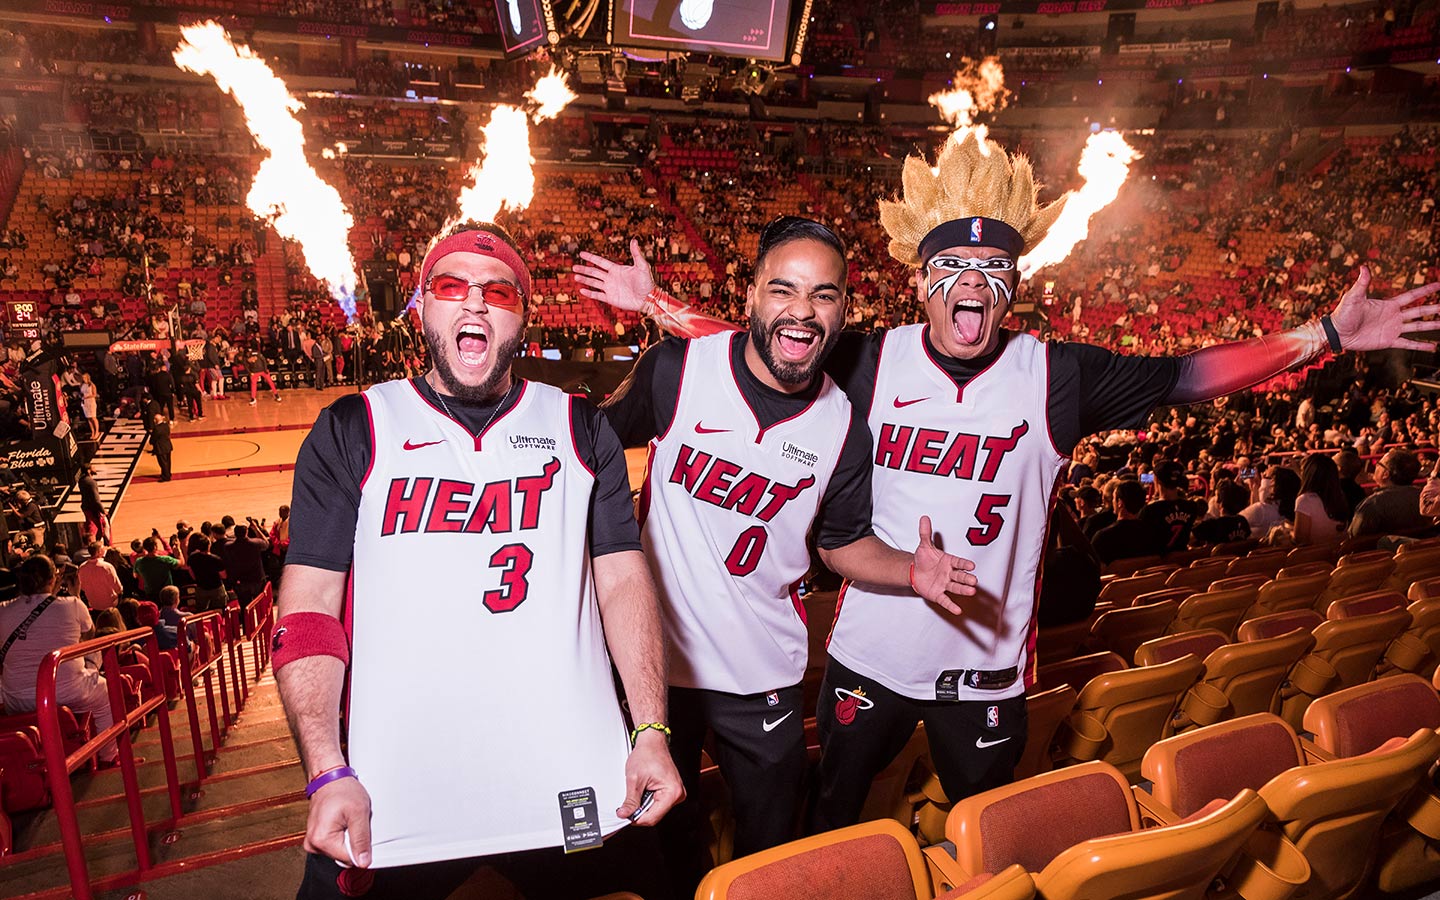 Miami: ingresso para jogo de basquete do Miami Heat no Kaseya